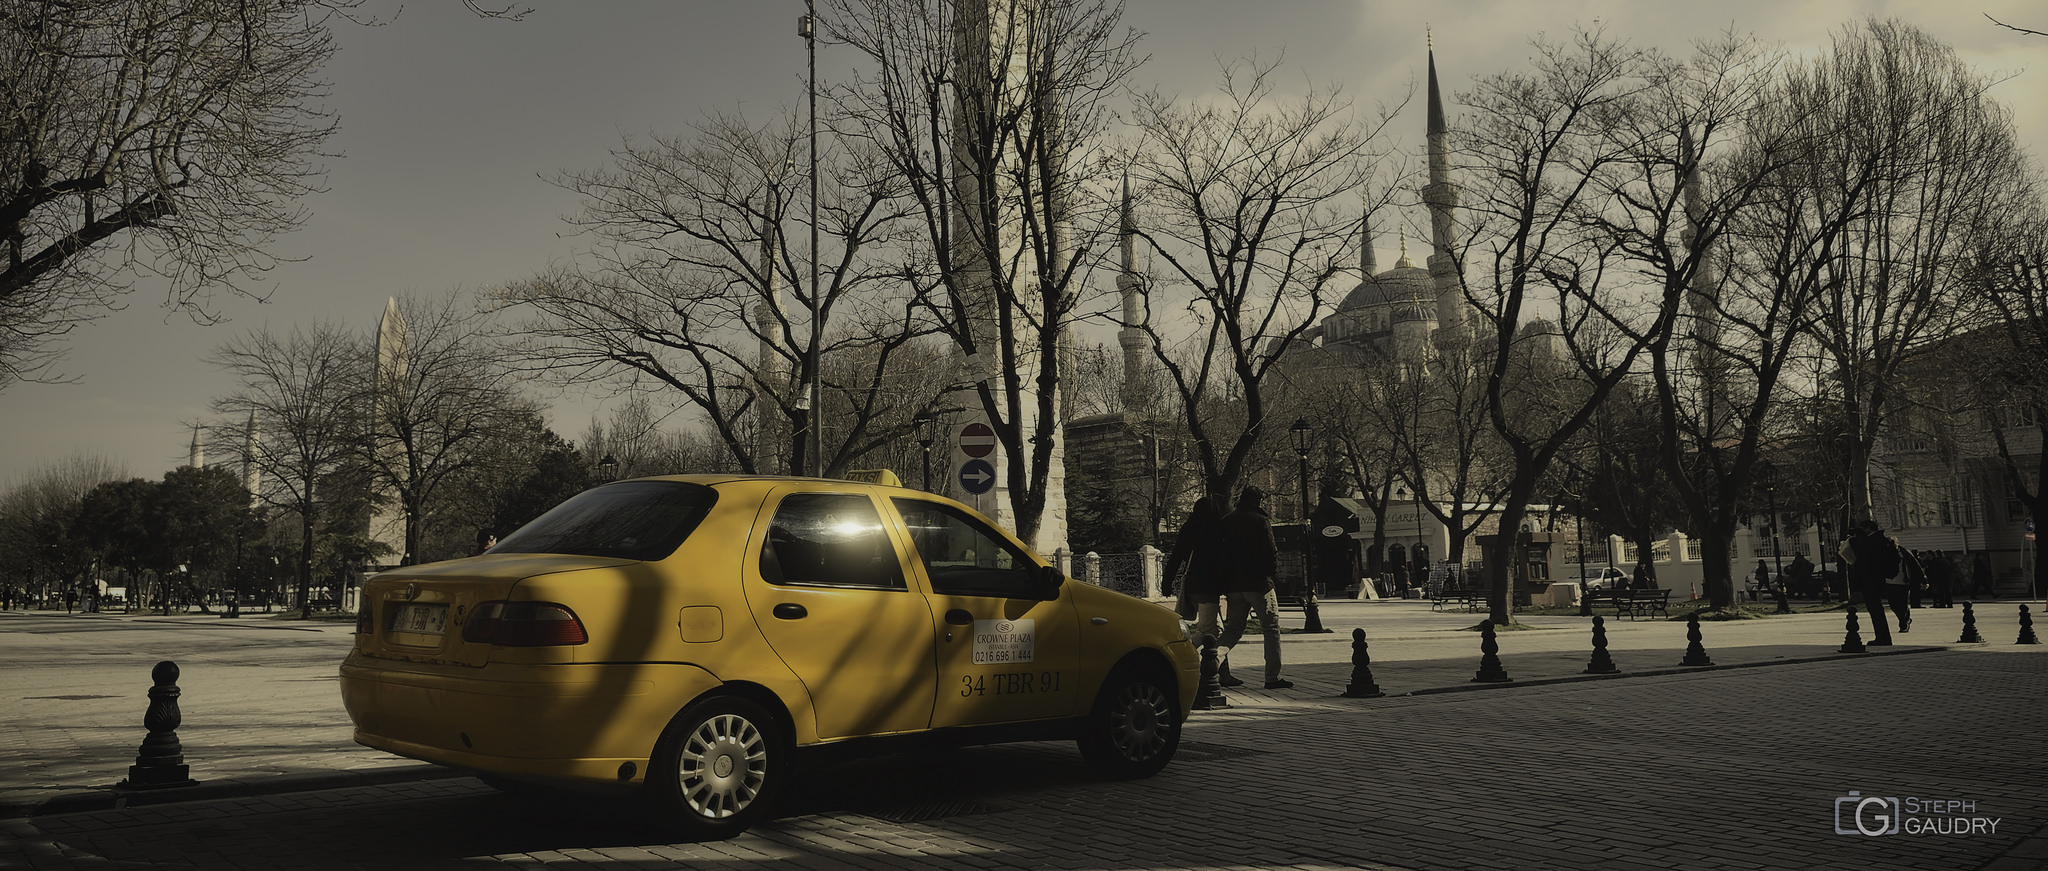 Renkler, sarı taksi ve Sultanahmet Camii [sinemaskop] [Cliquez pour lancer le diaporama]